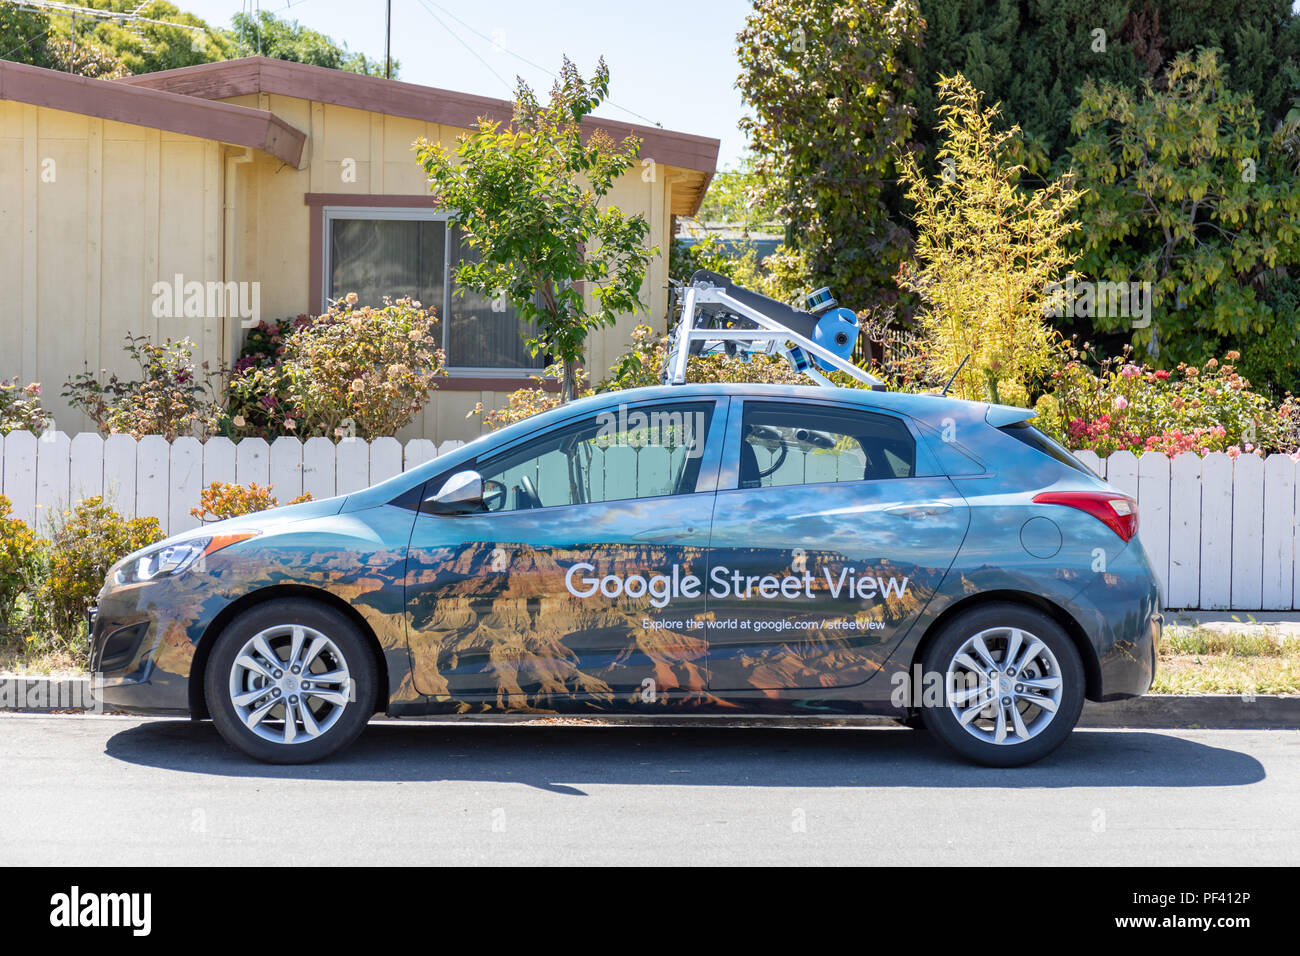 Google Street View camera car ; California, USA Banque D'Images